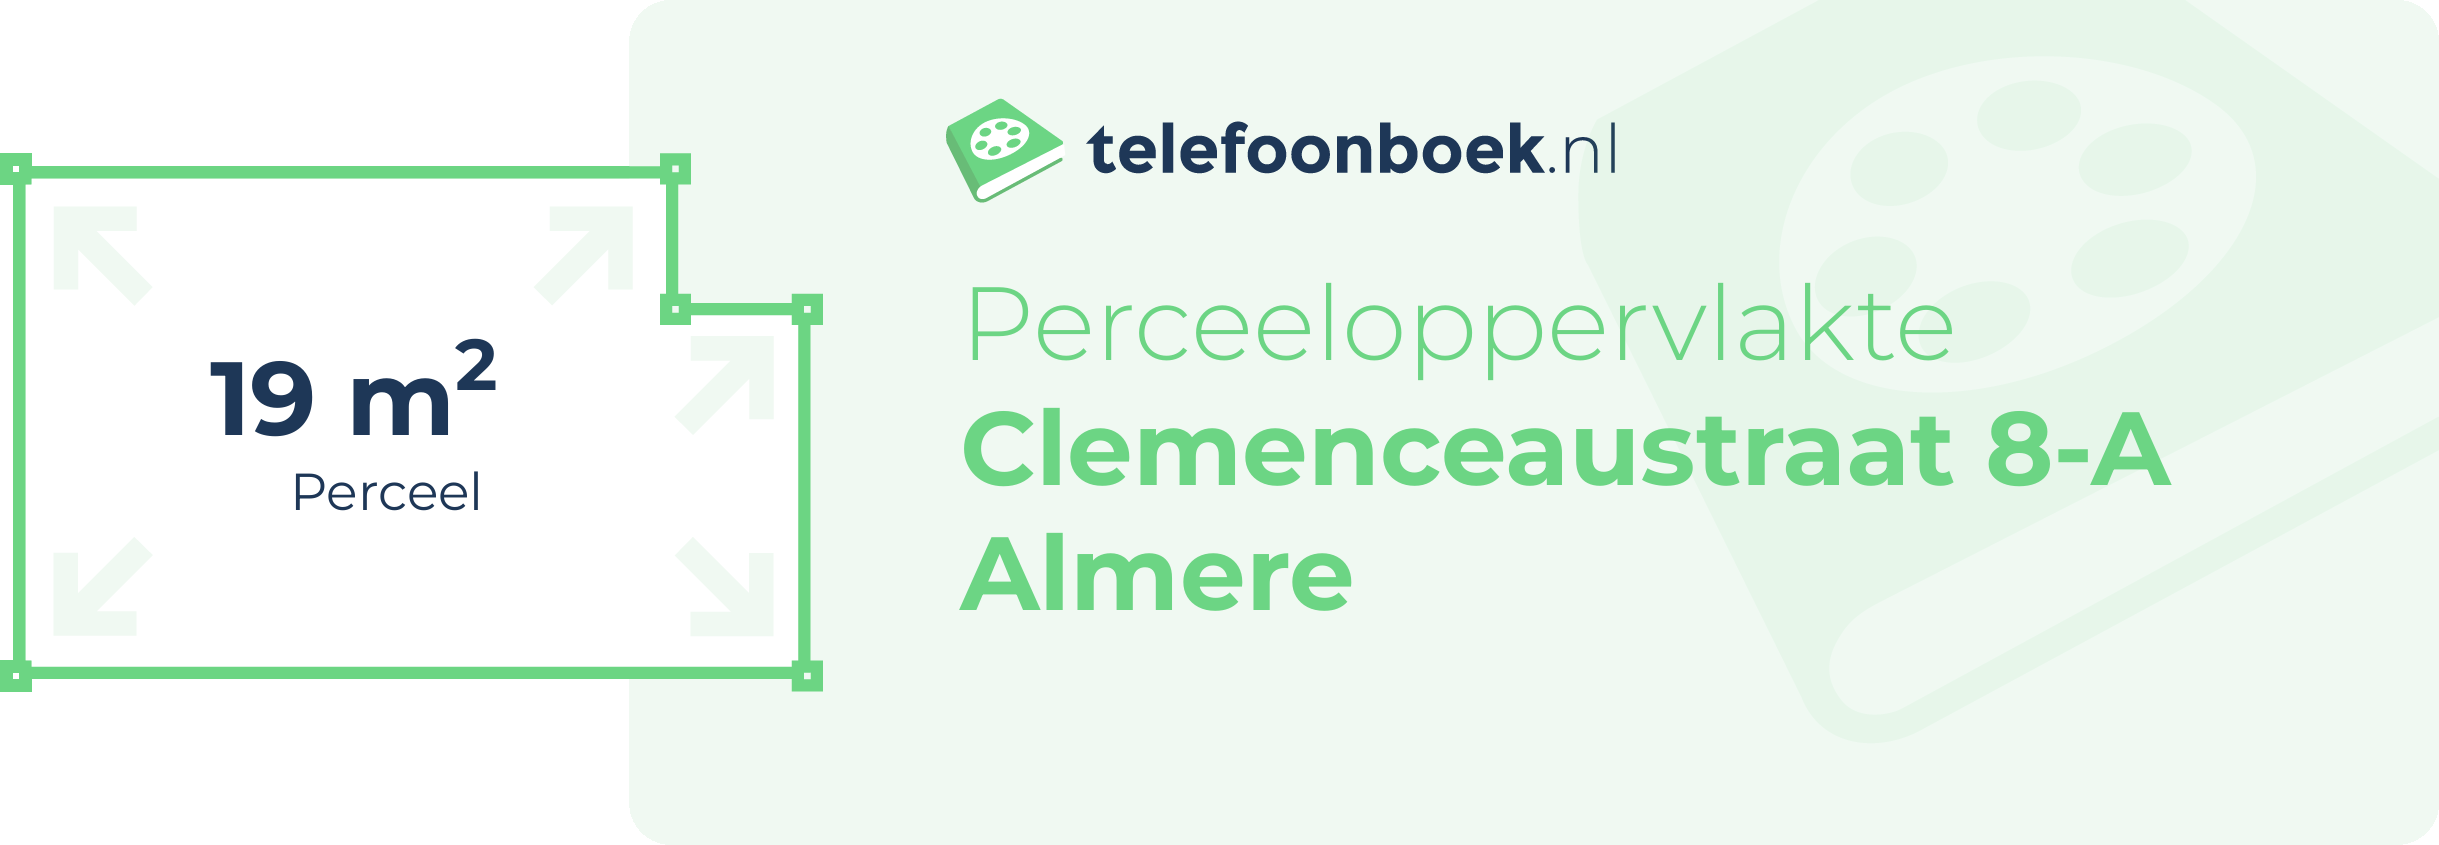 Perceeloppervlakte Clemenceaustraat 8-A Almere